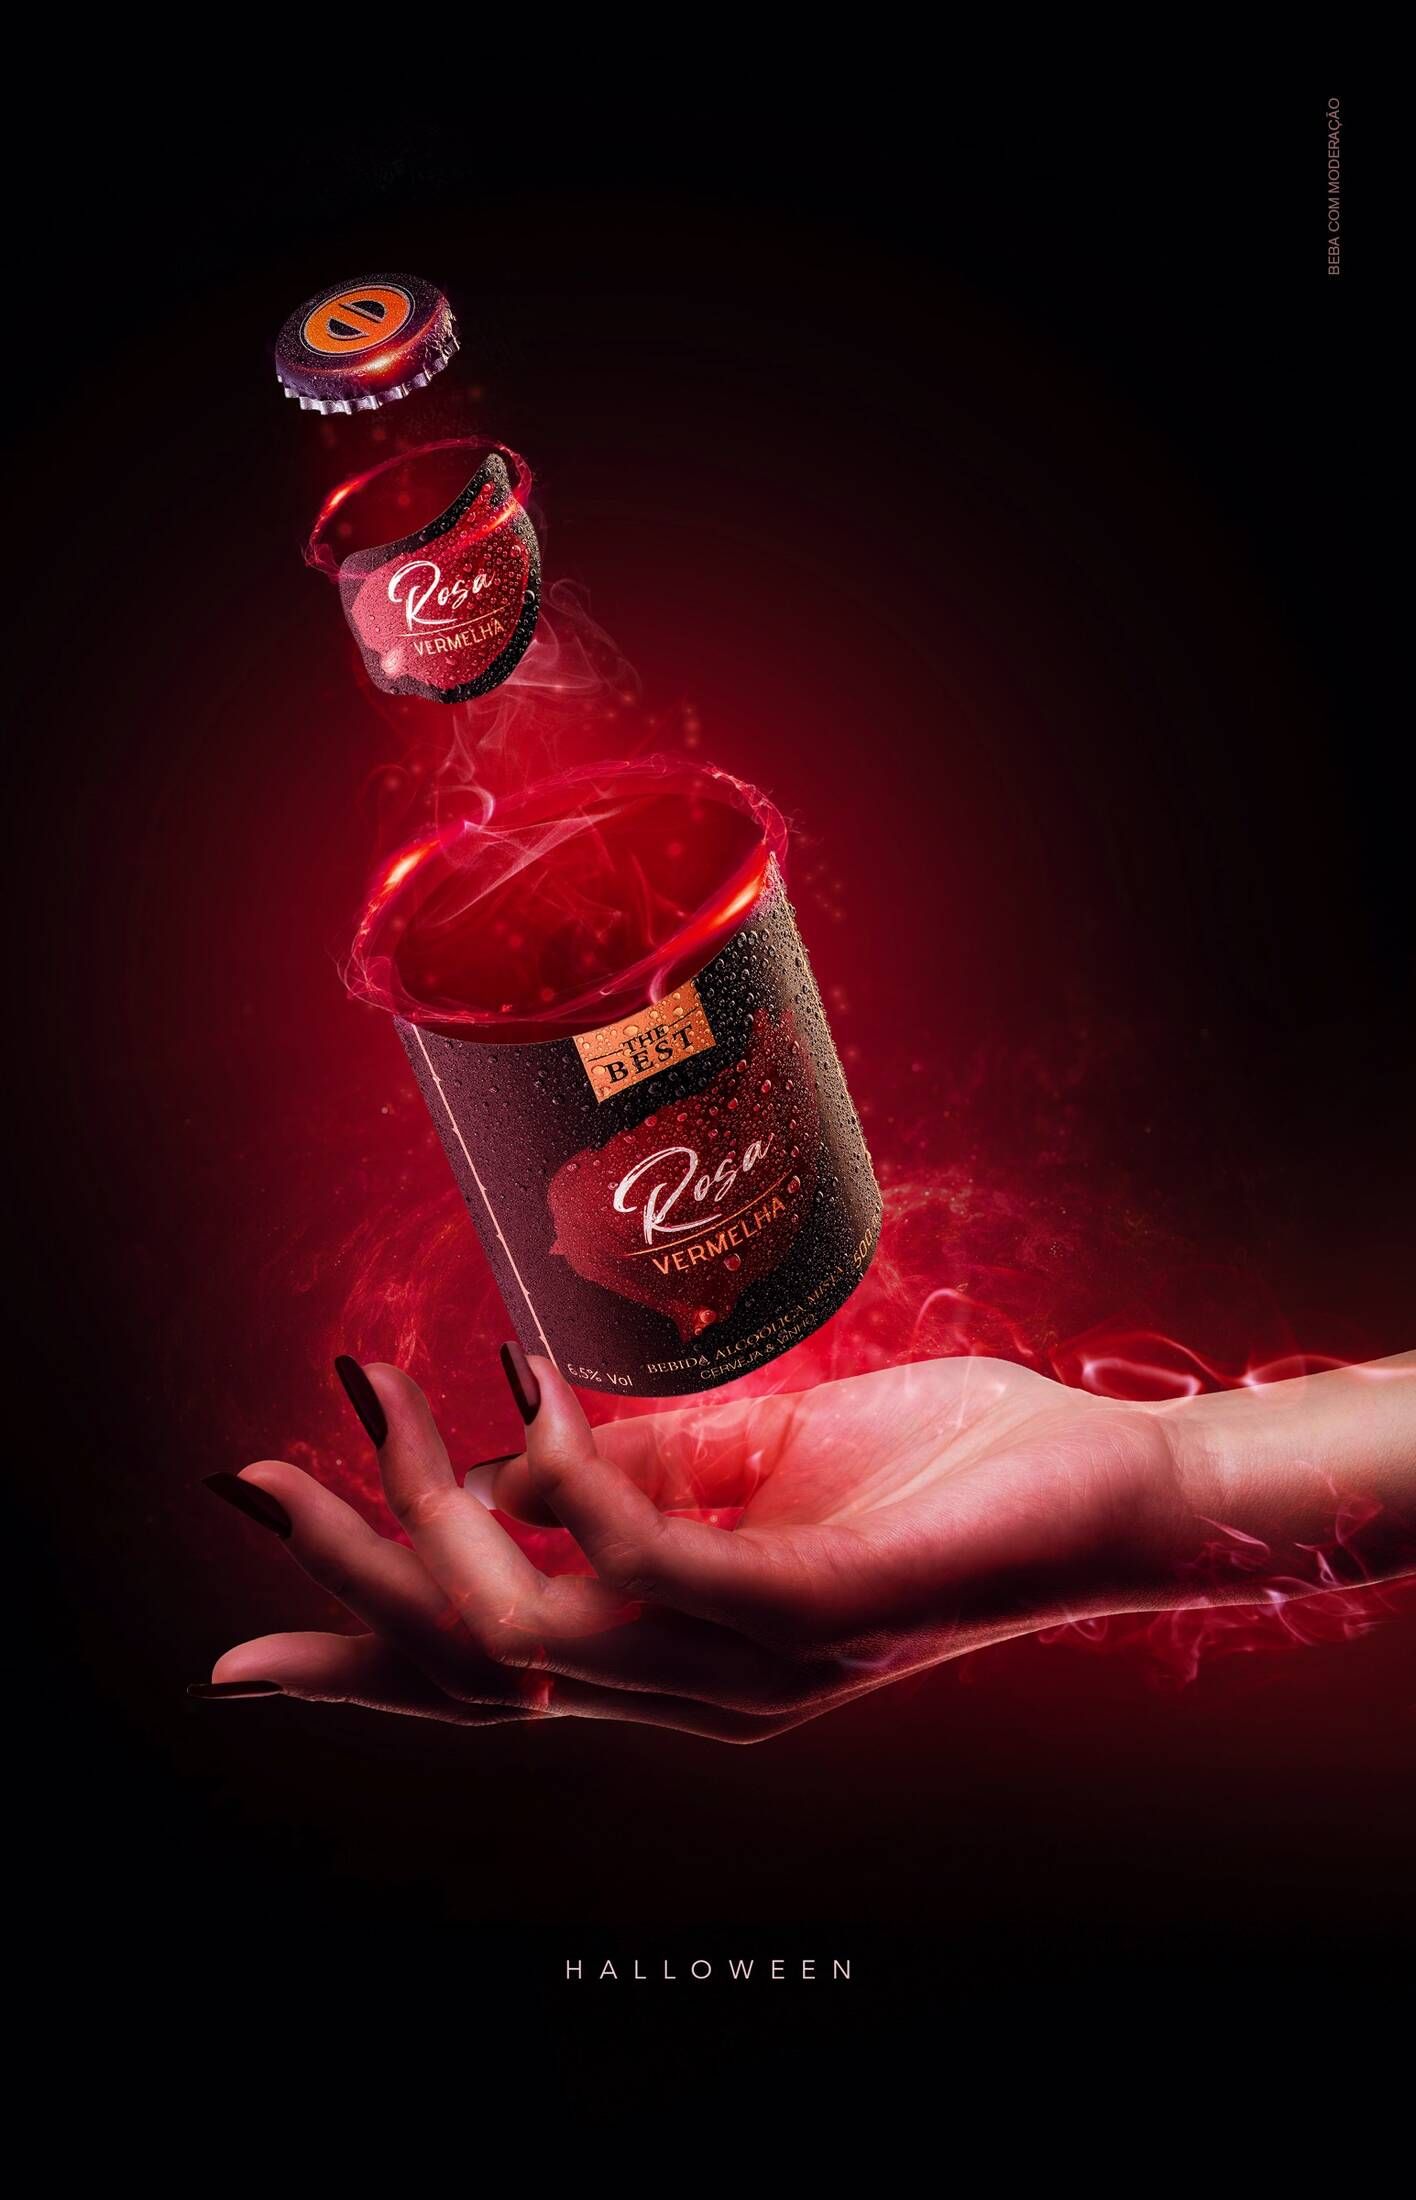 Rosa Vermelha Halloween Ad